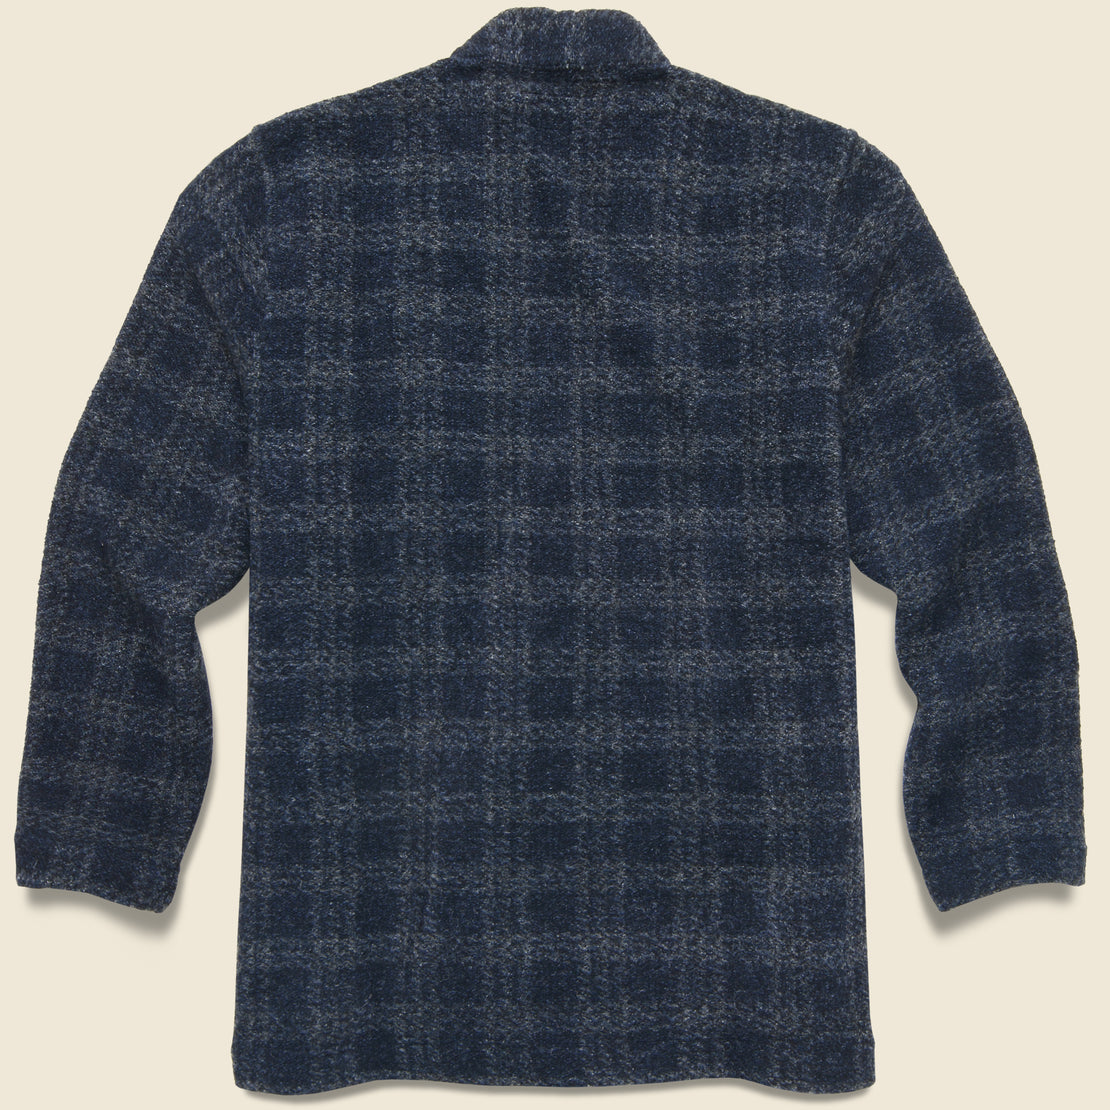 Kyoto Work Jacket - Navy Swarm Fleece - Universal Works - STAG Provisions - Outerwear - Coat / Jacket